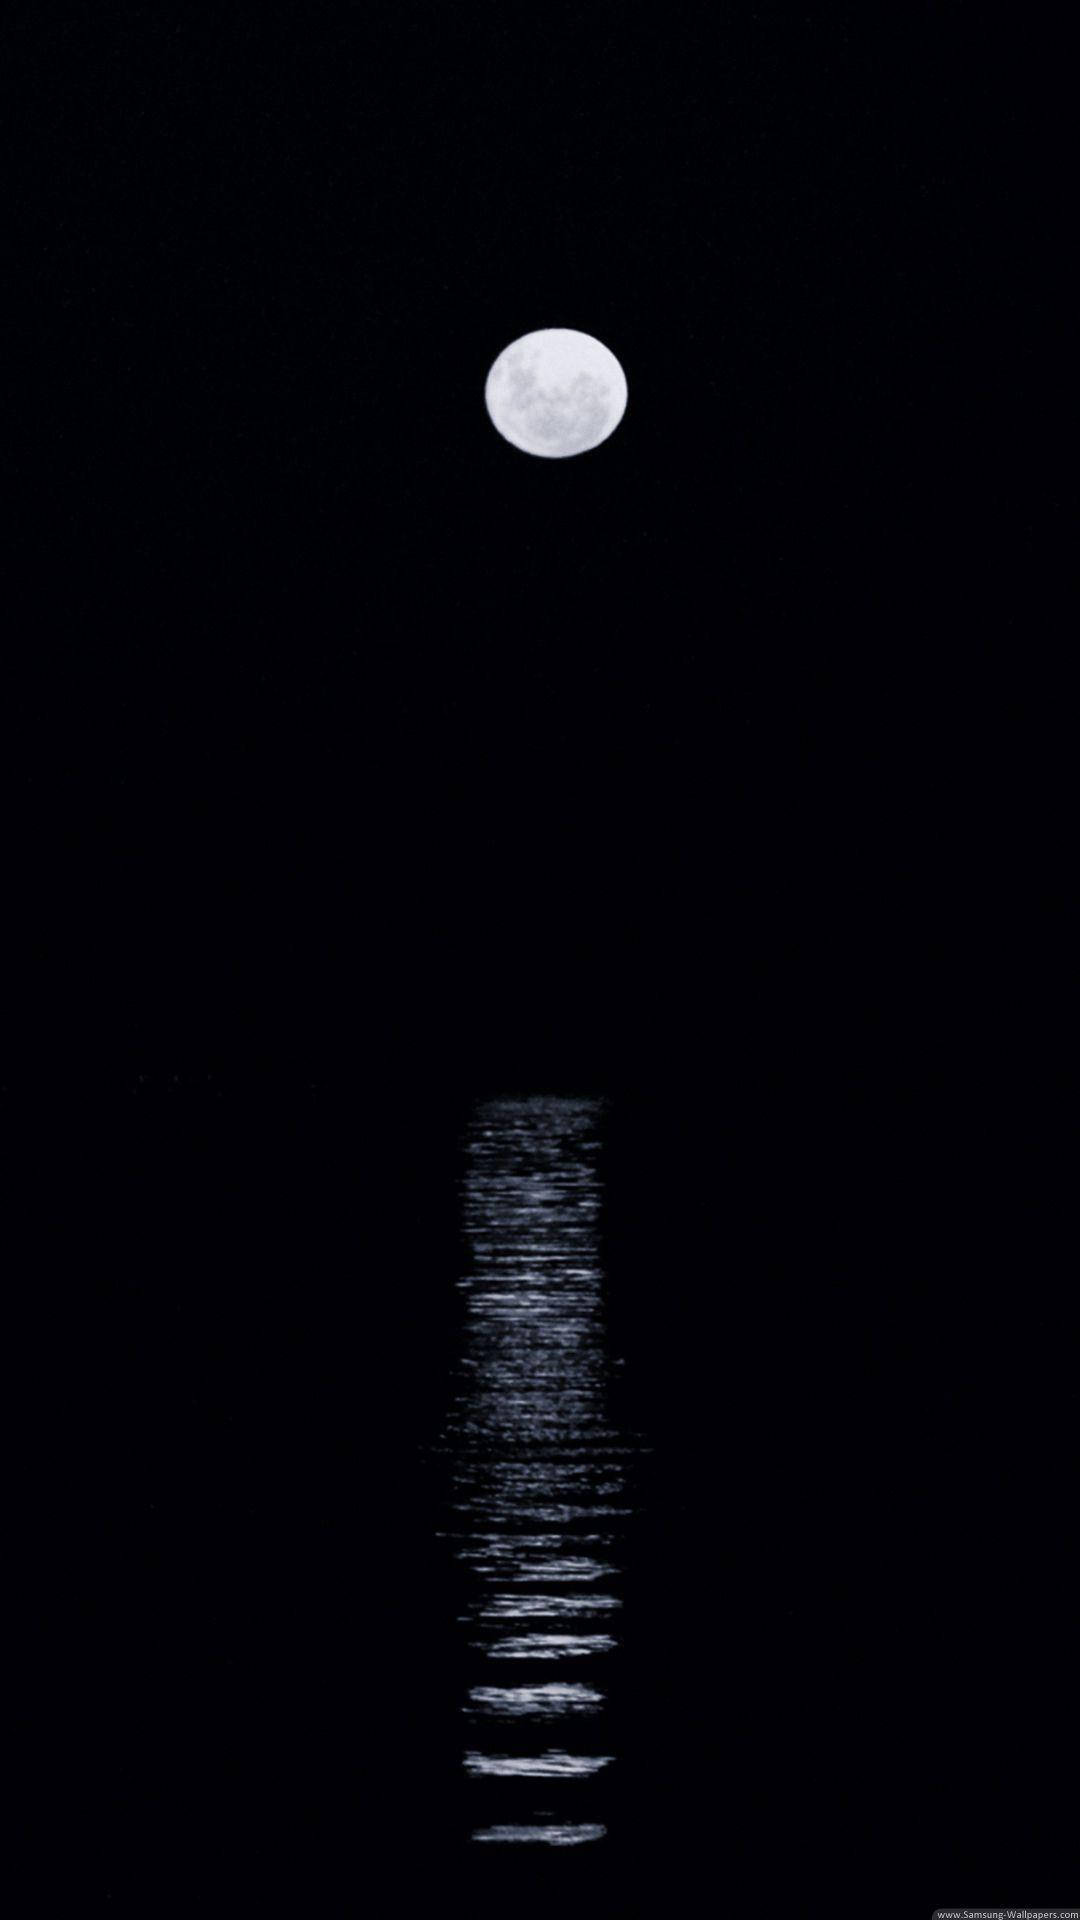 Caption: Mystical Full Moon in Dark Sky Wallpaper